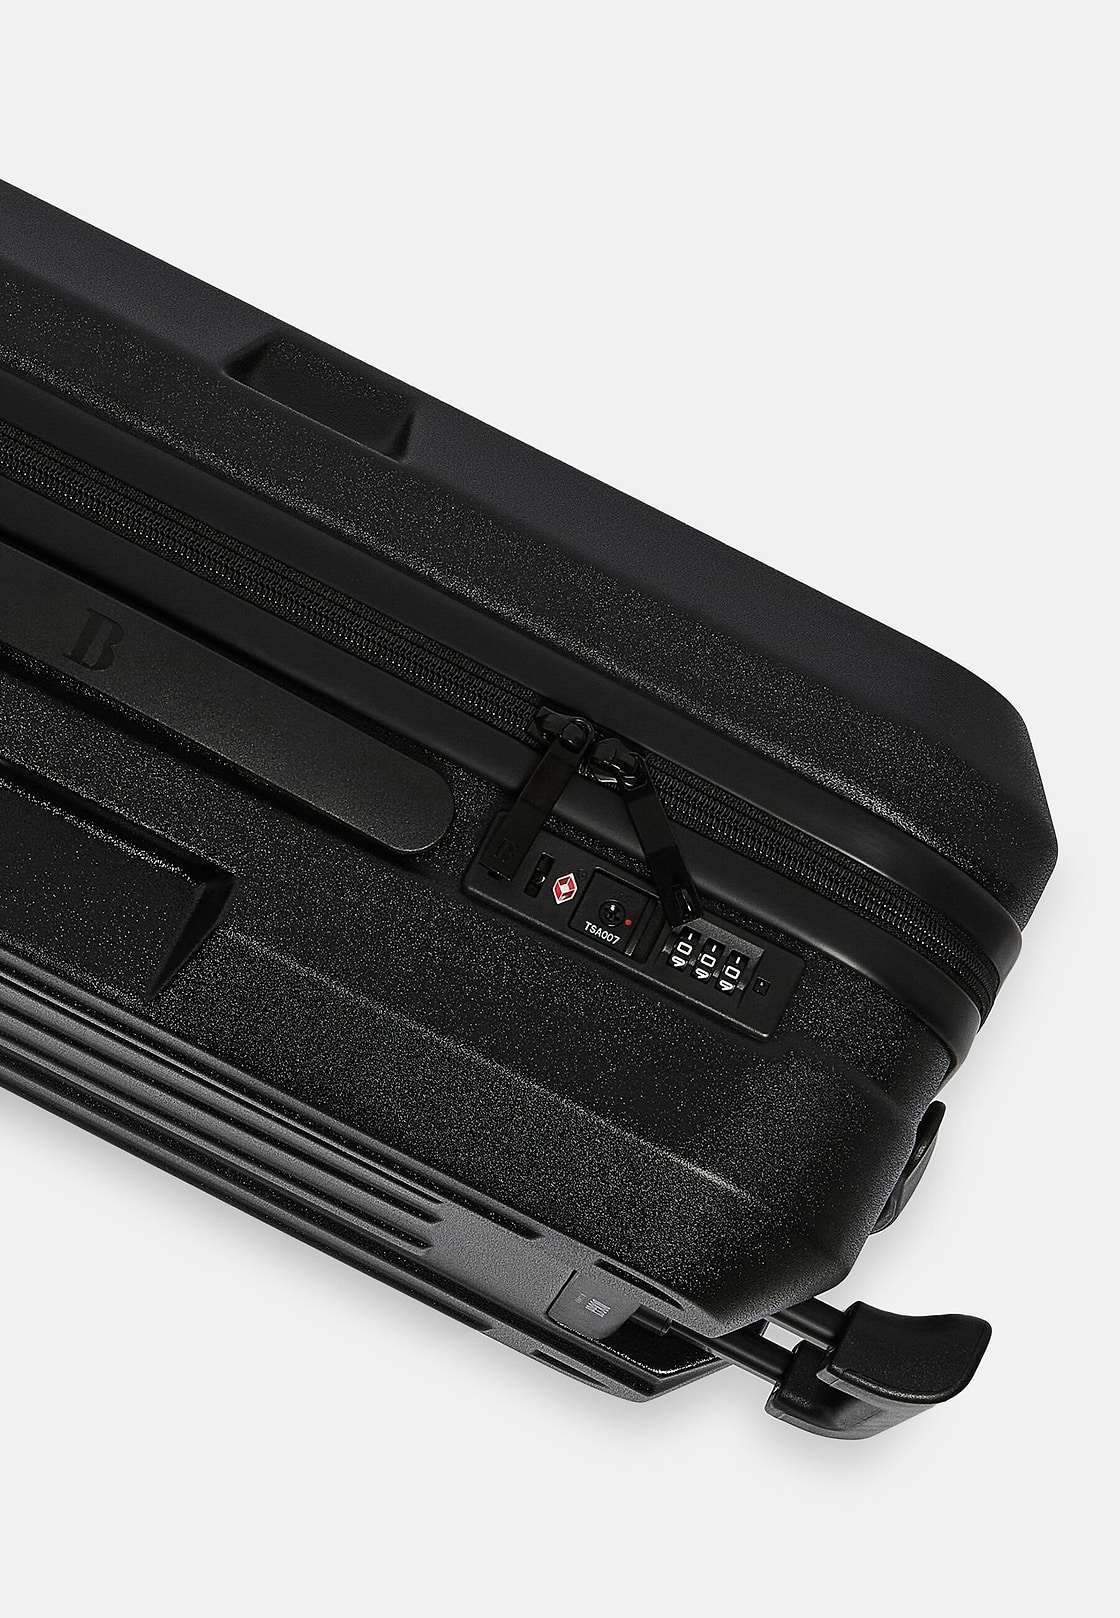 Black Polycarbonate Cage Trolley Suitcase, Black, hi-res